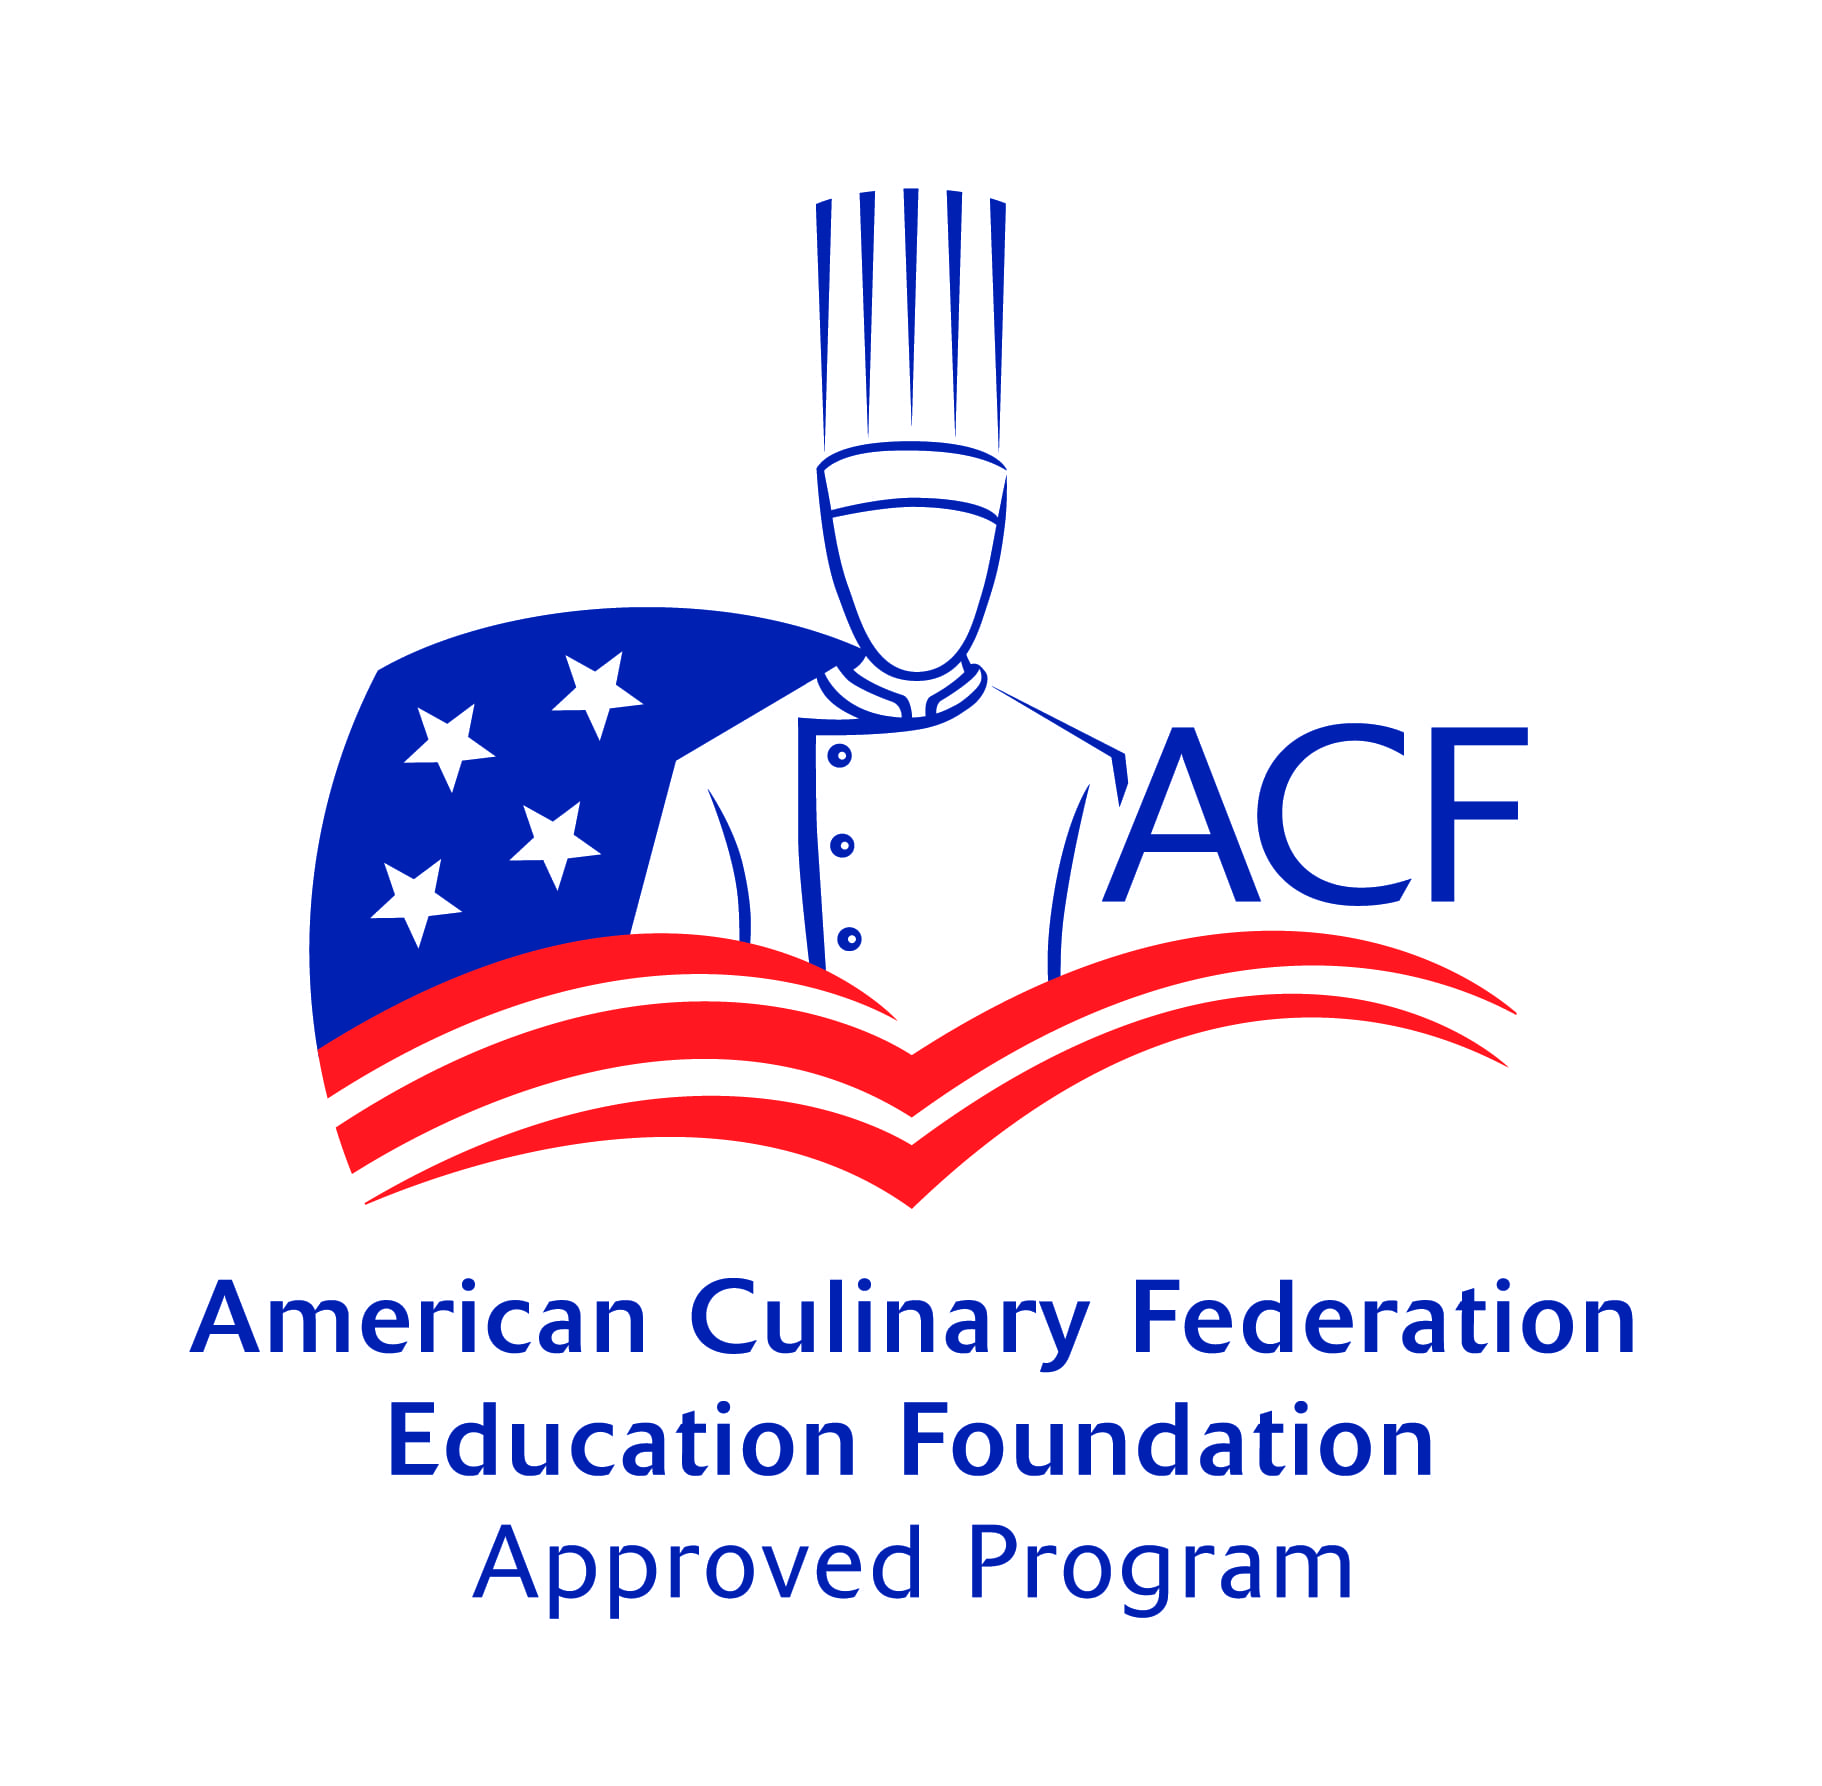 https://rouxbe.com/wp-content/uploads/2020/09/ACFEF-approved-program-logo-1.jpg